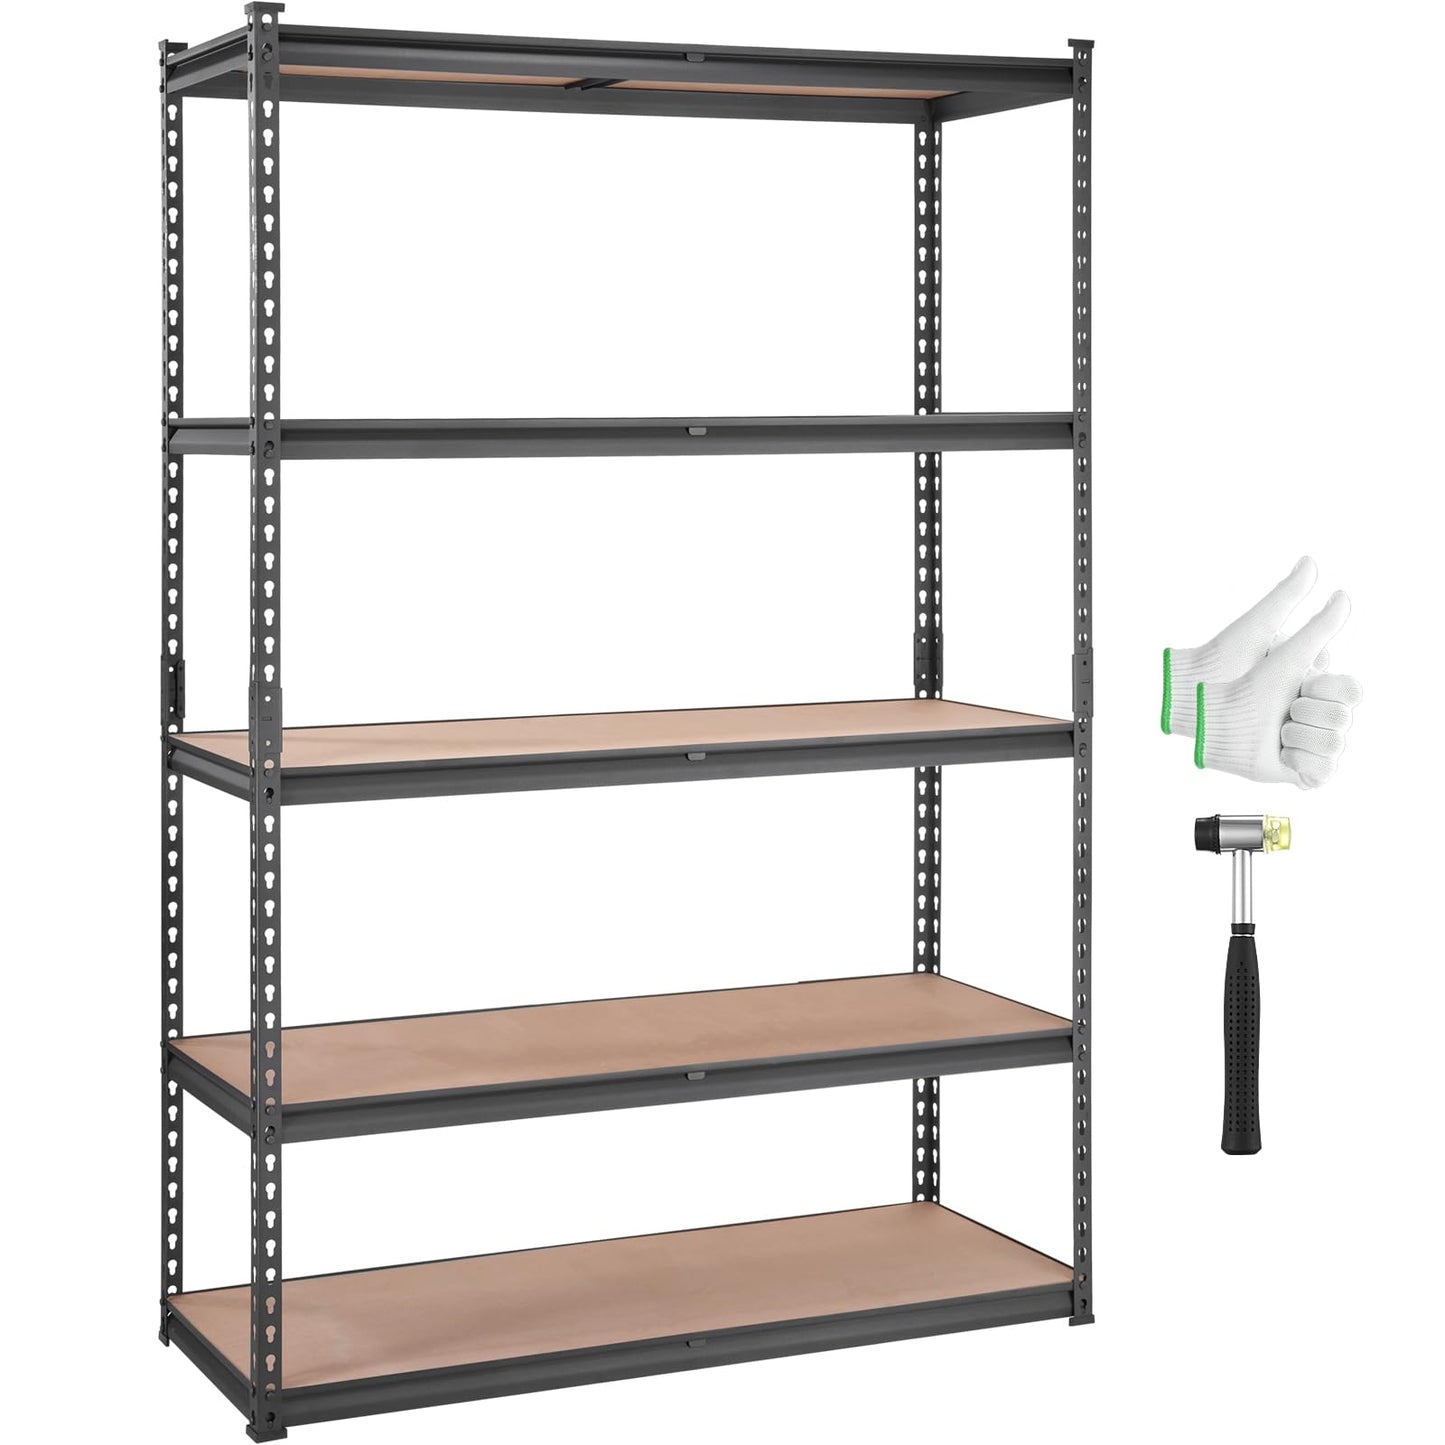 VEVOR Storage Shelving Unit, 5-Tier Adjustable, 2000 lbs Capacity, Heavy Duty Garage Shelves Metal Organizer Utility Rack, Black, 48" L x 18" W x 72"